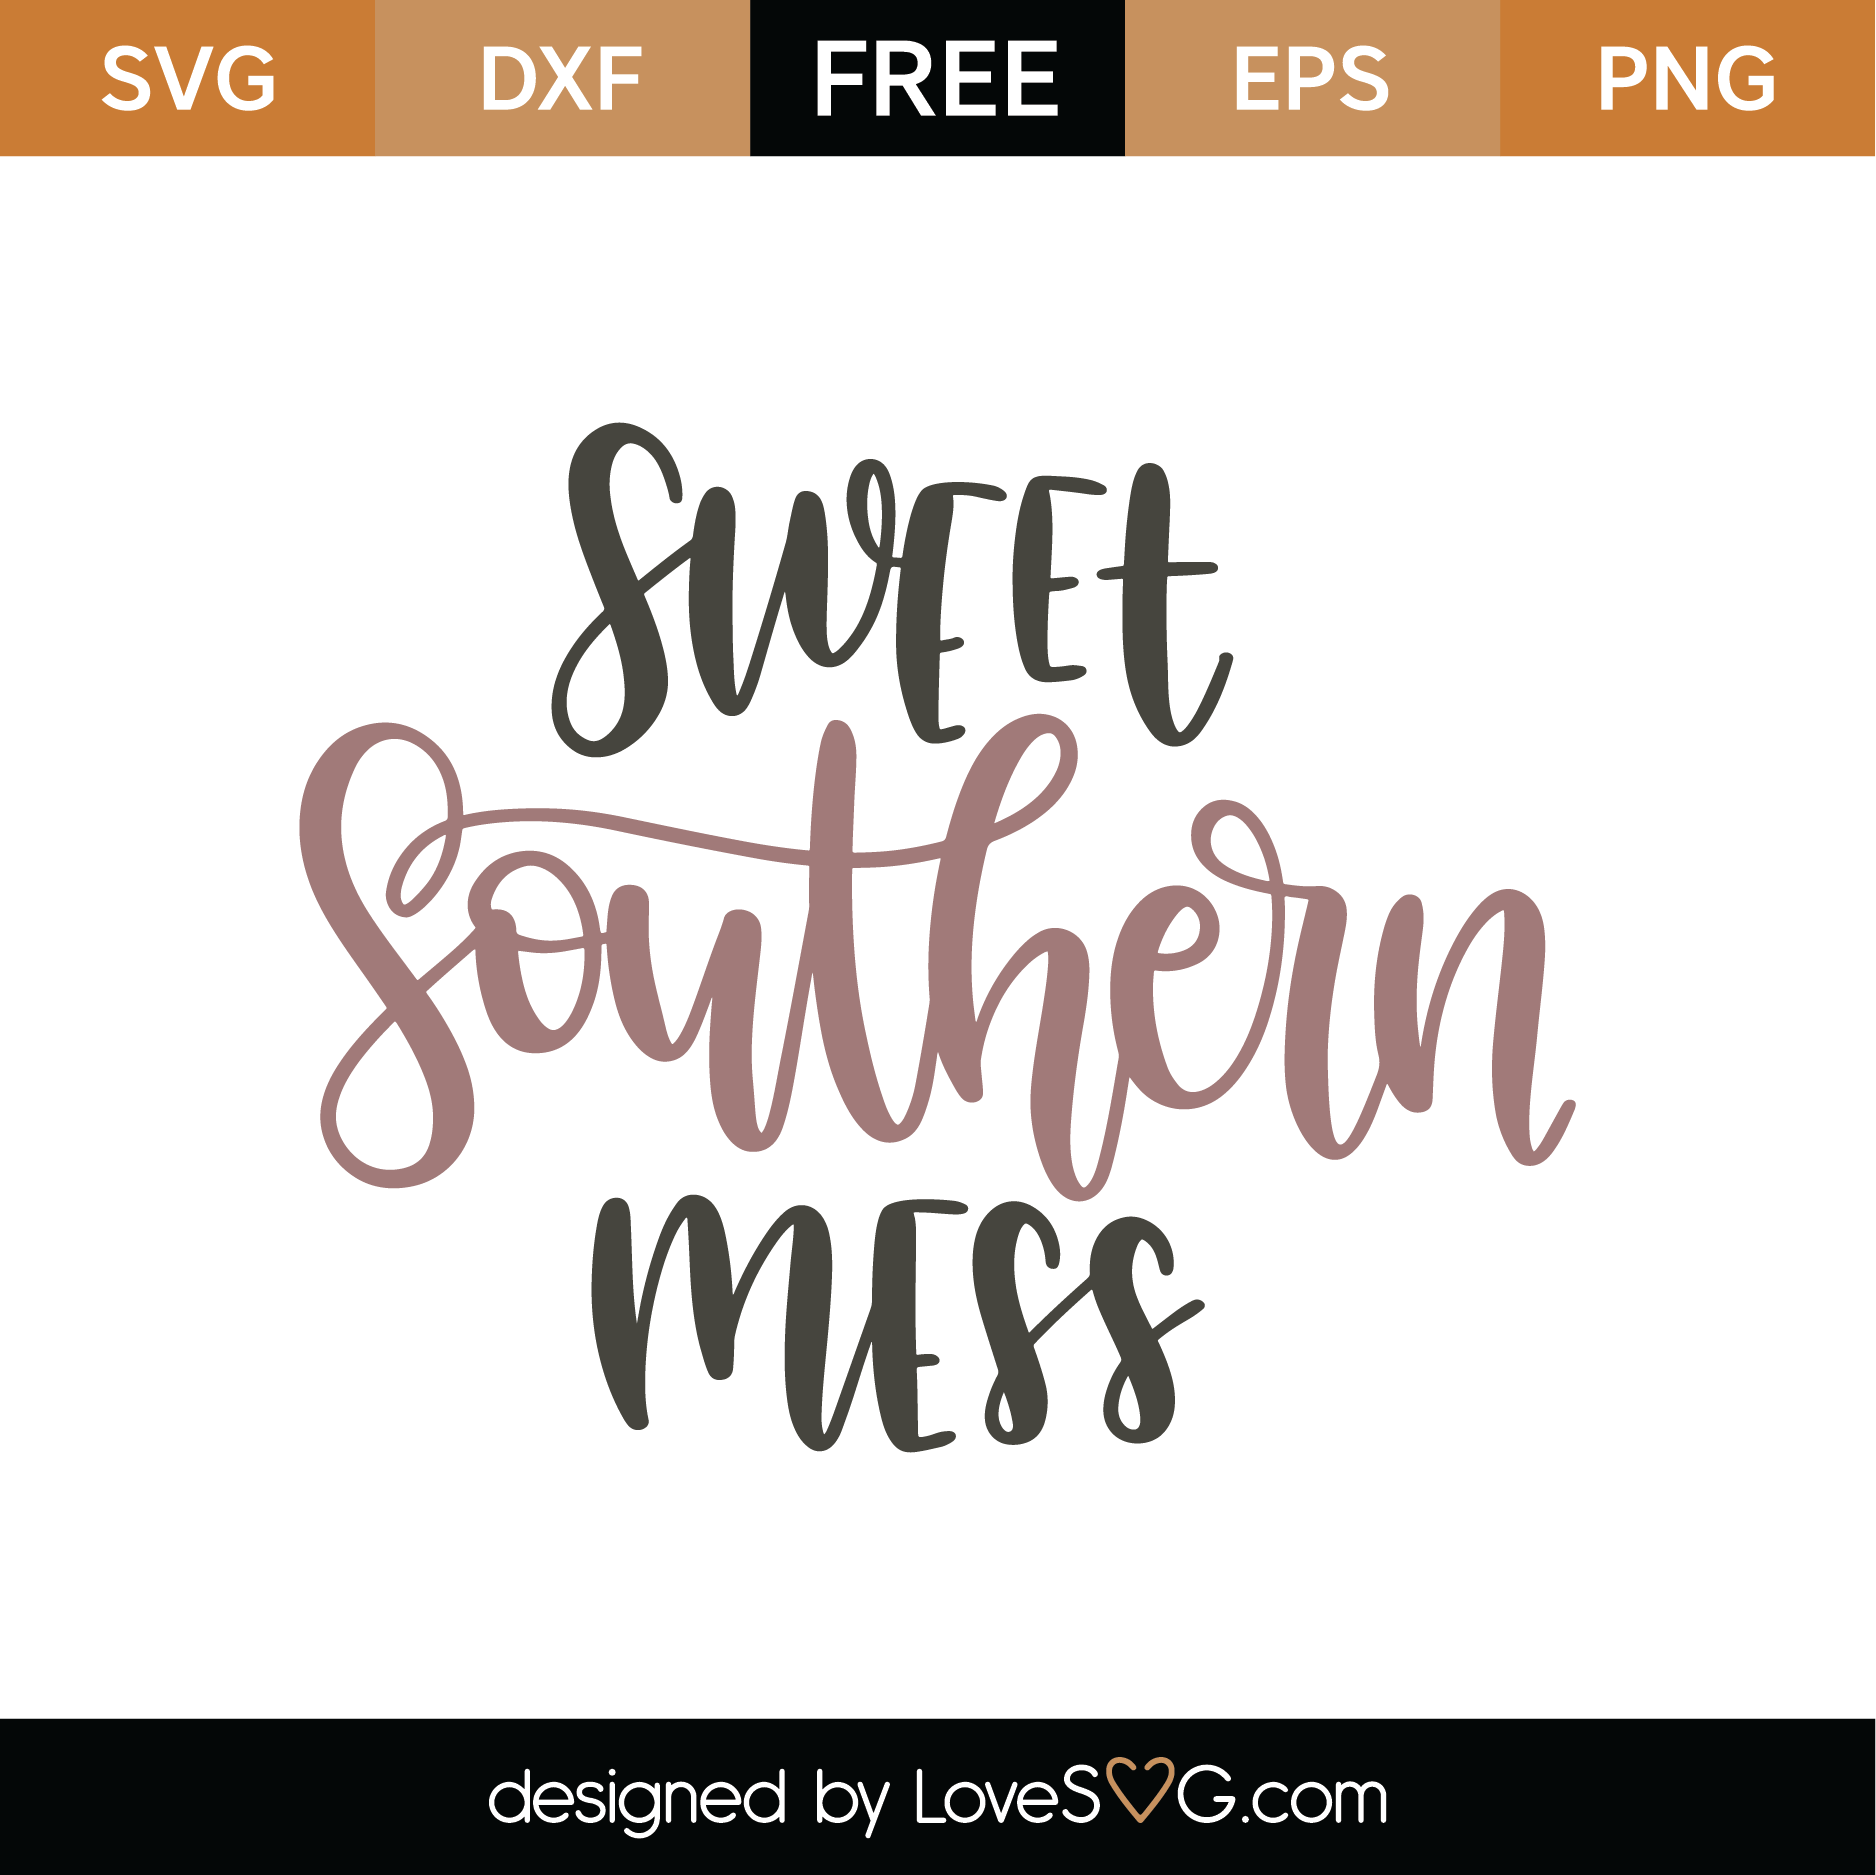 Download Free Sweet Southern Mess SVG Cut File | Lovesvg.com